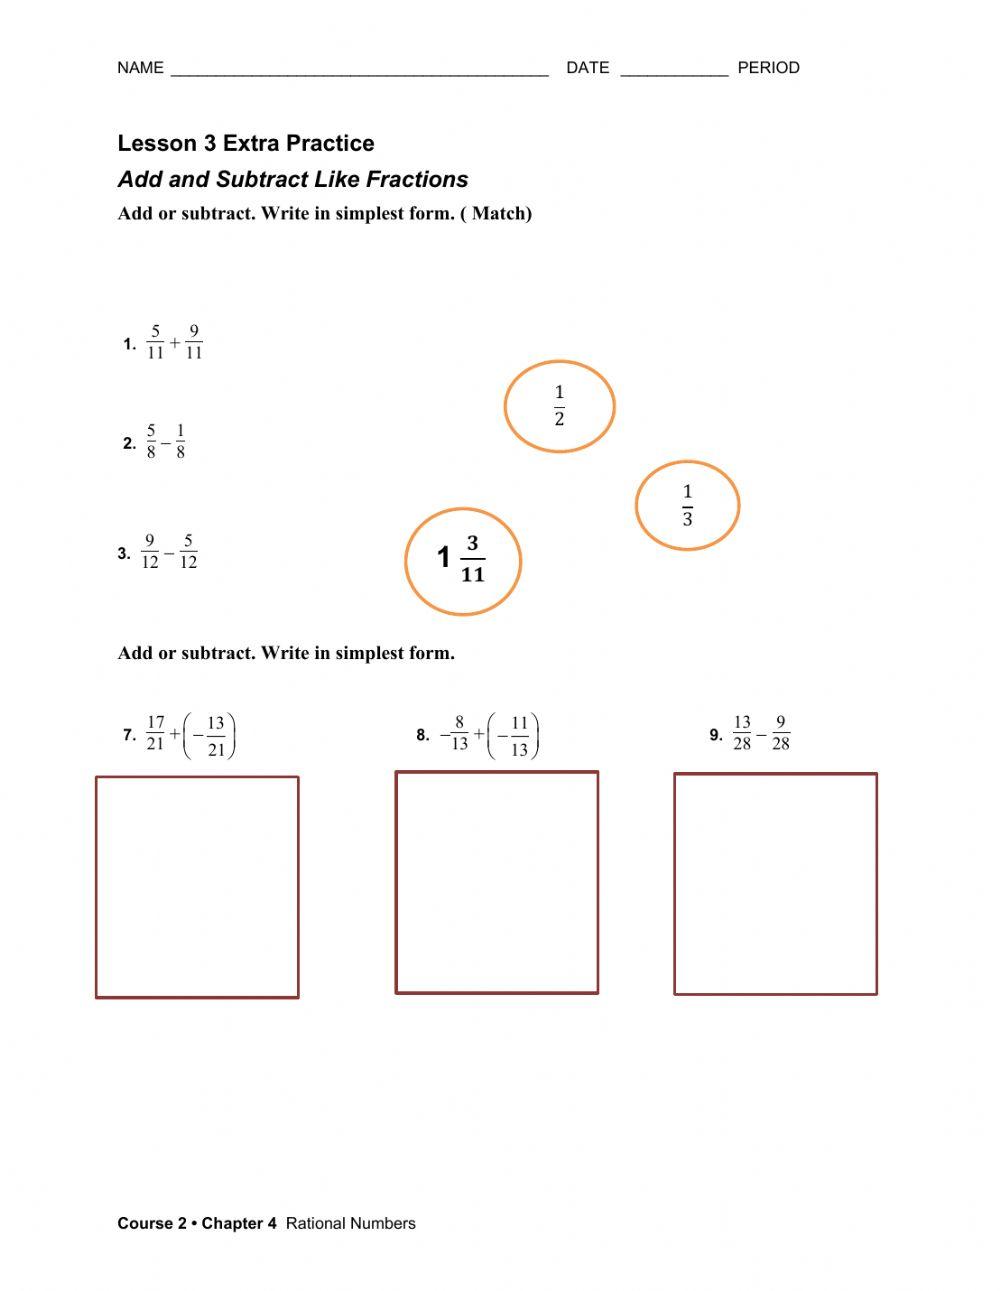 Add - Subtract Like fraction 1